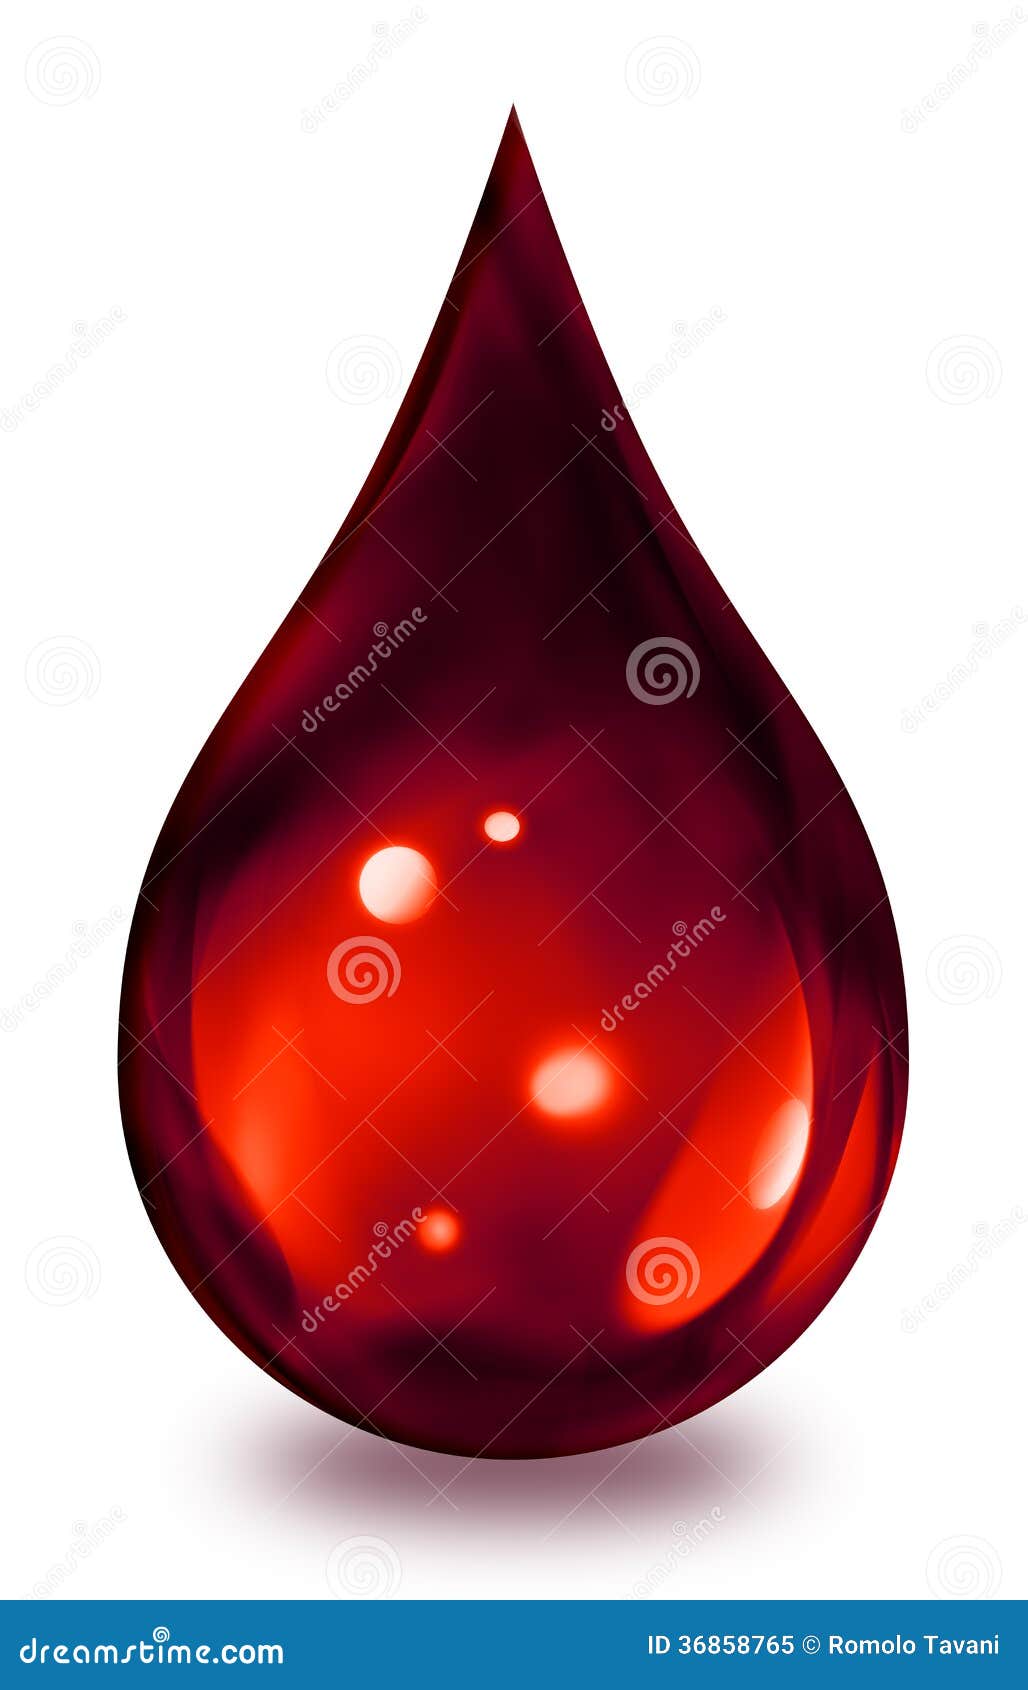 Blood drop icon stock illustration. Illustration of